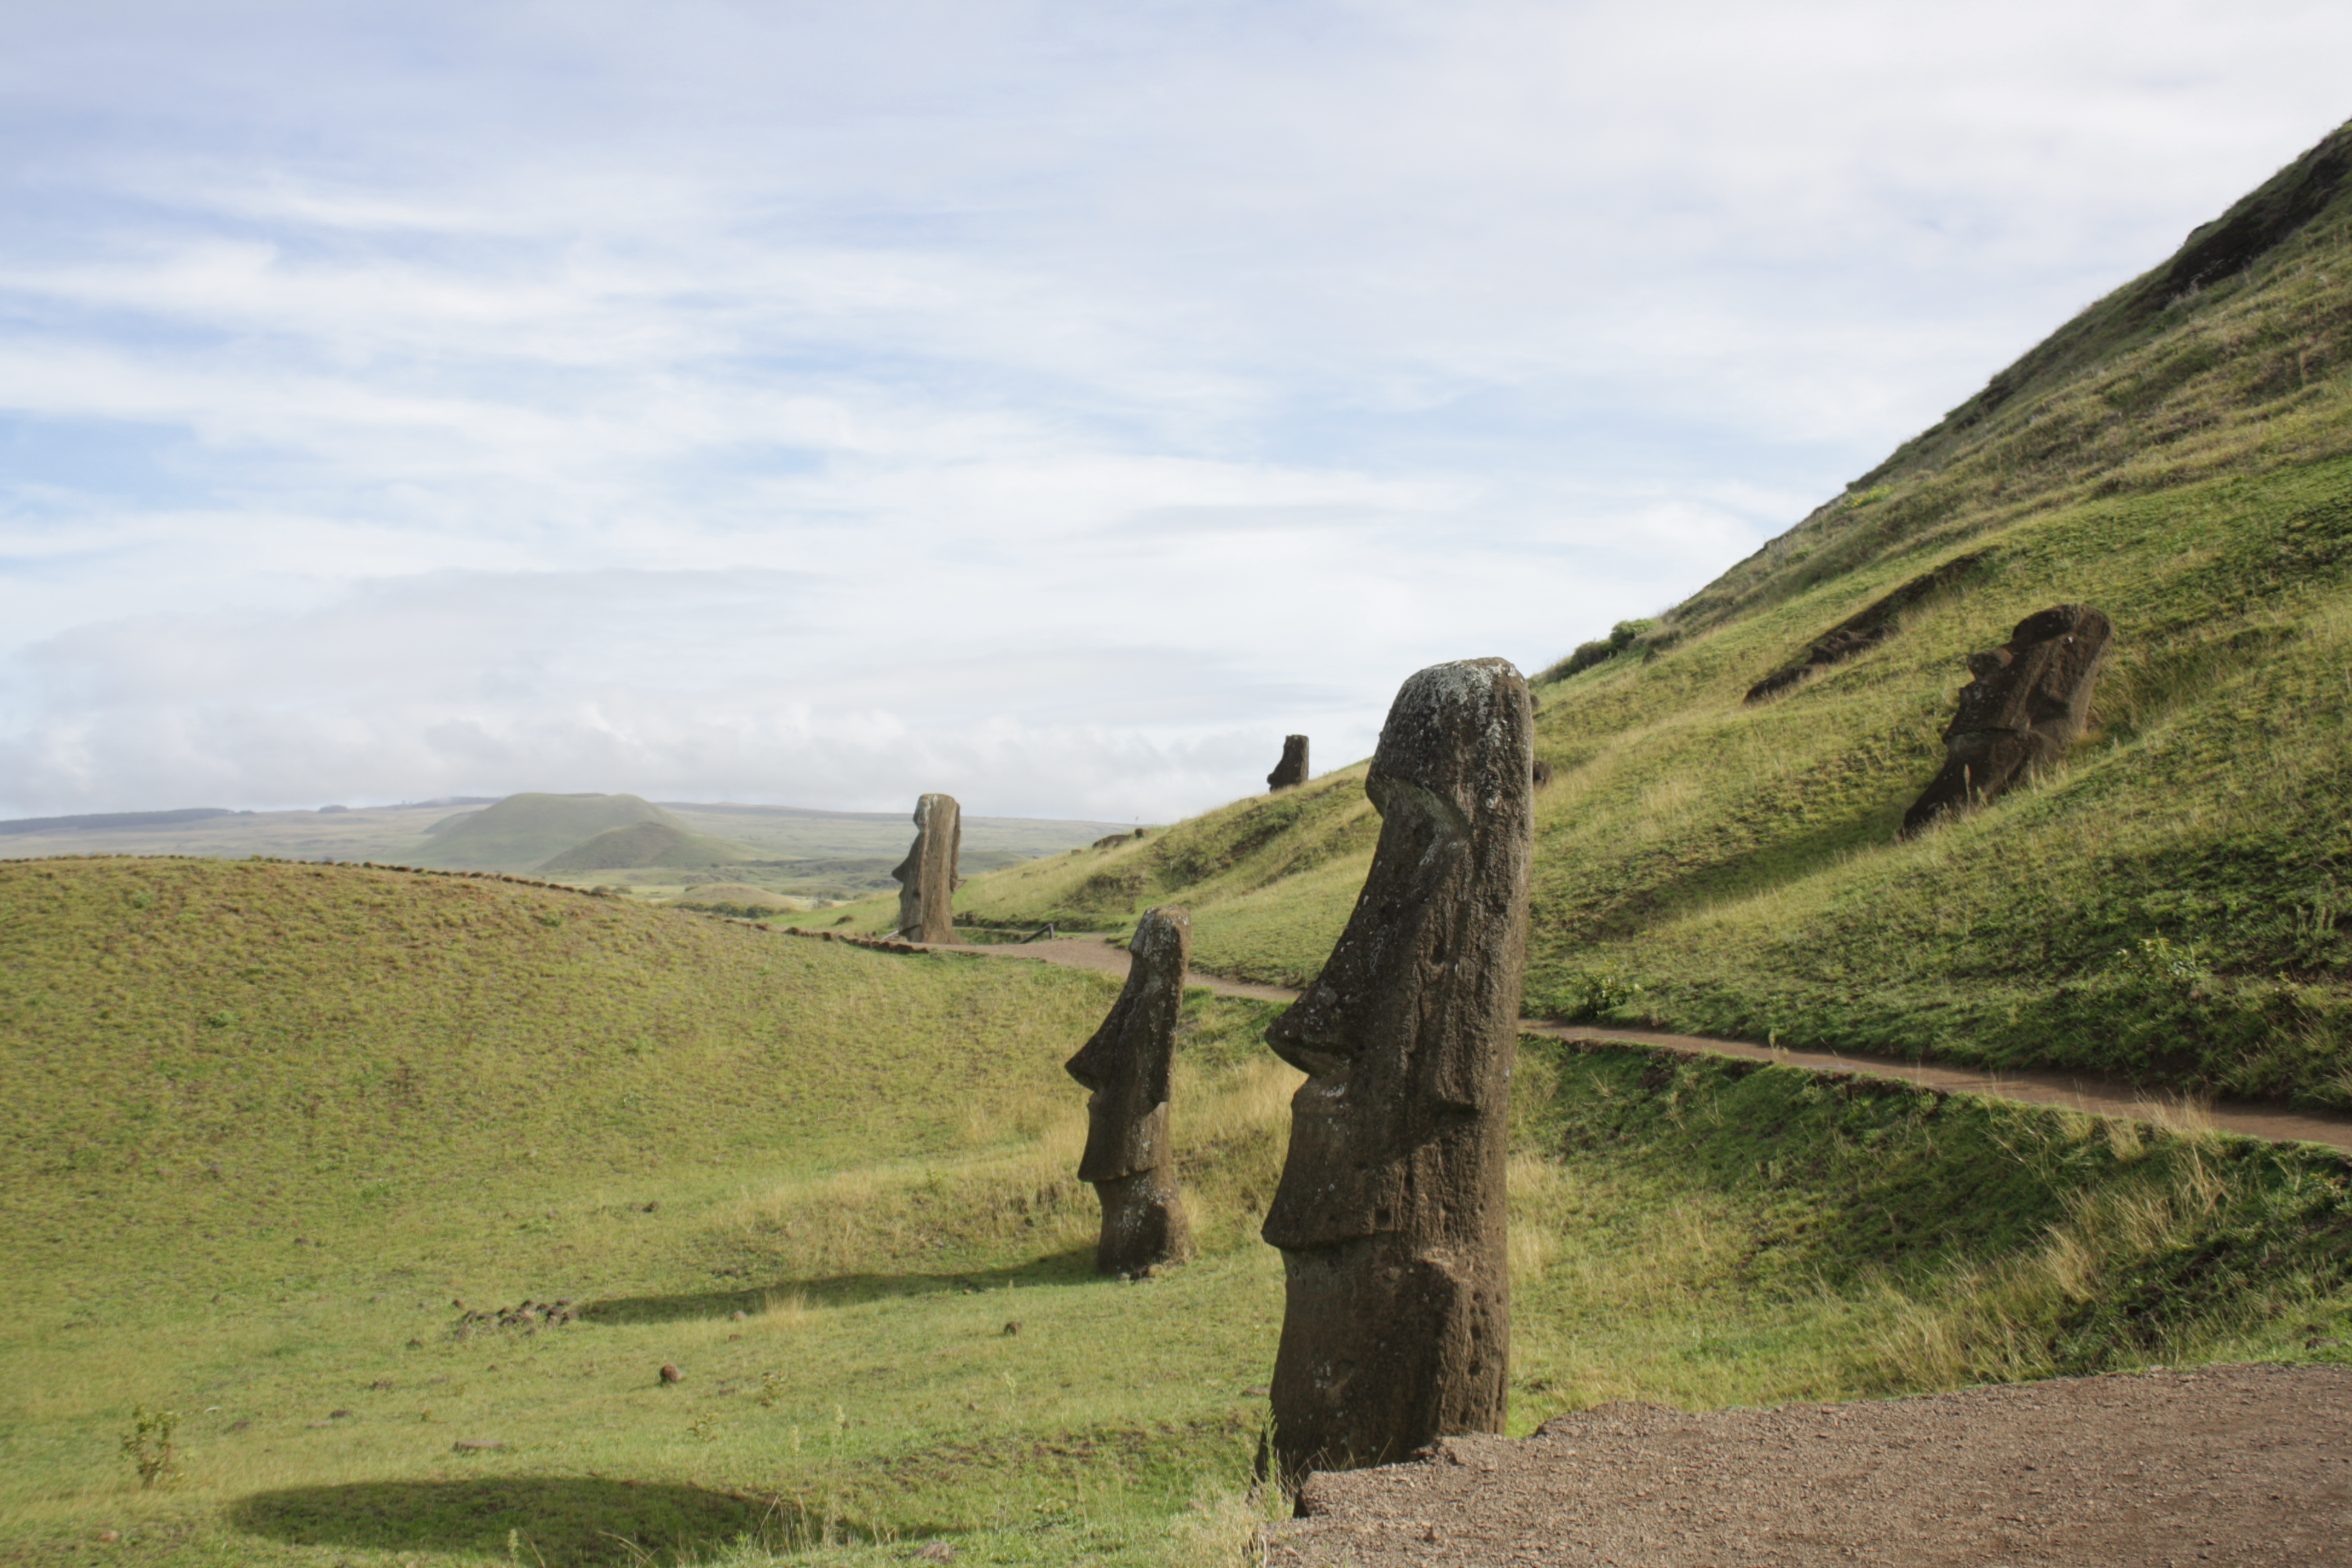 The Moai at Rano Raraku